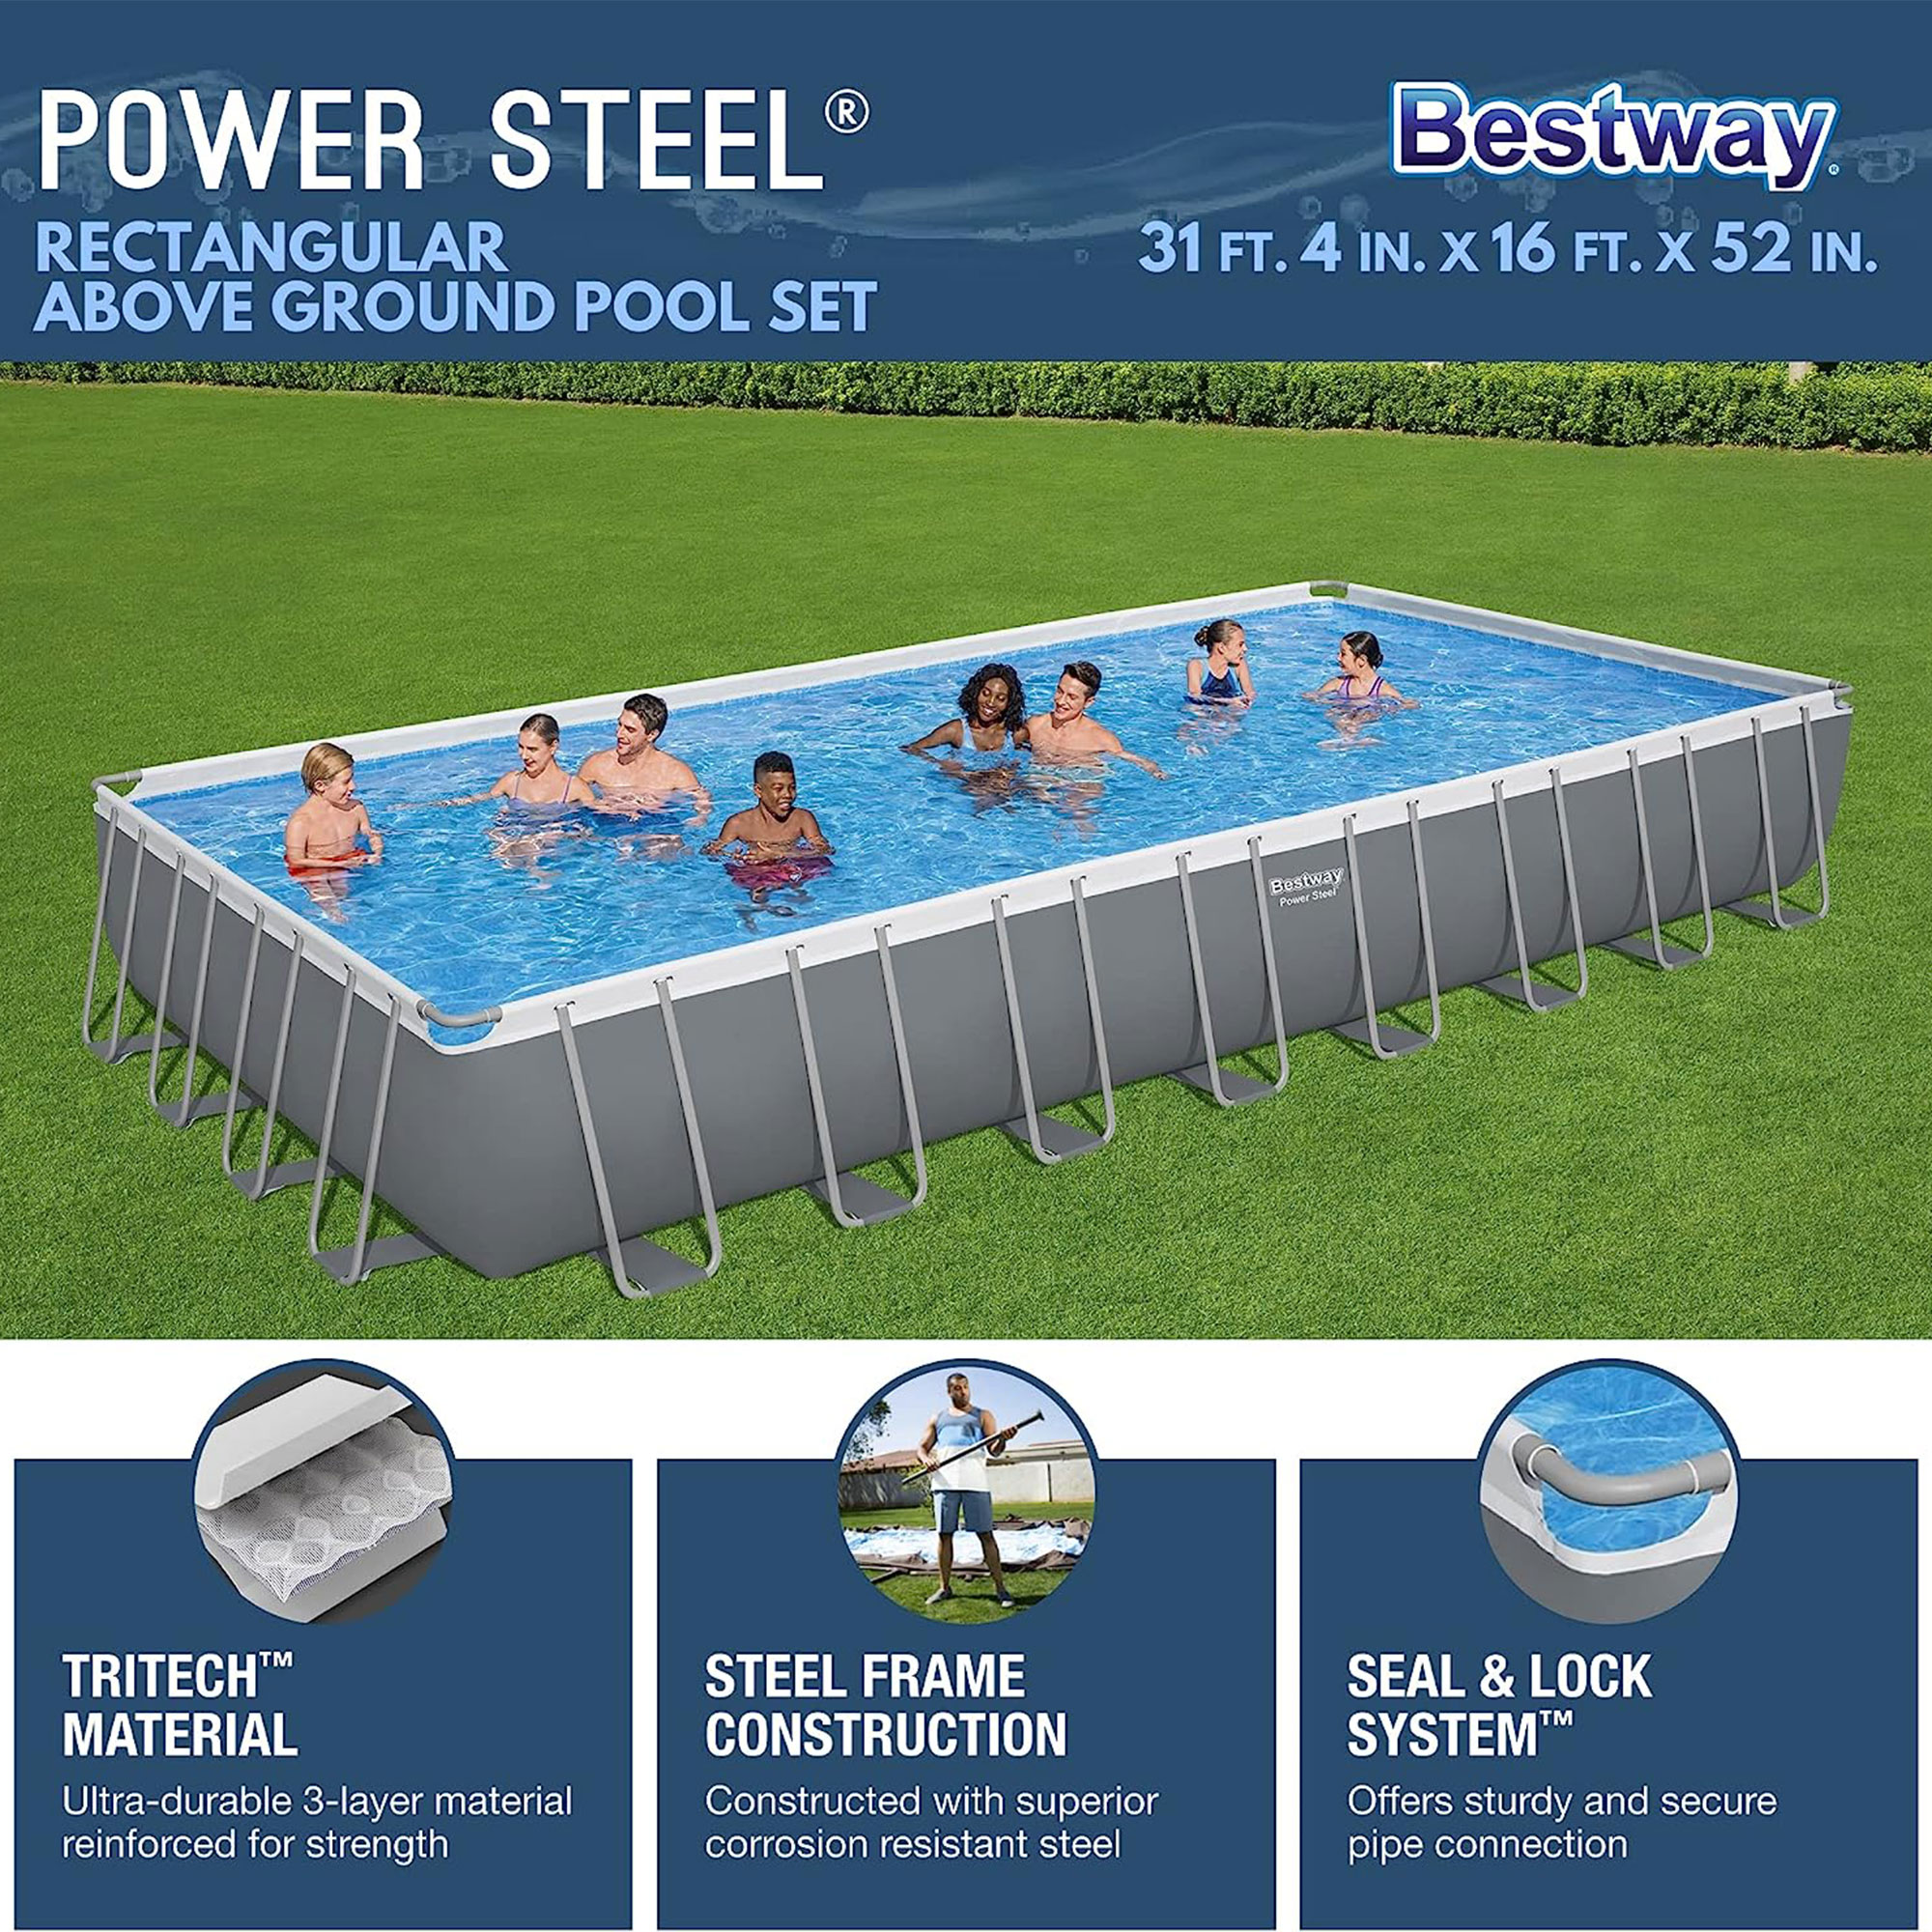 Bestway Power Steel Rectangular Metal Frame Above Ground Pool Set, Grey - image 4 of 9